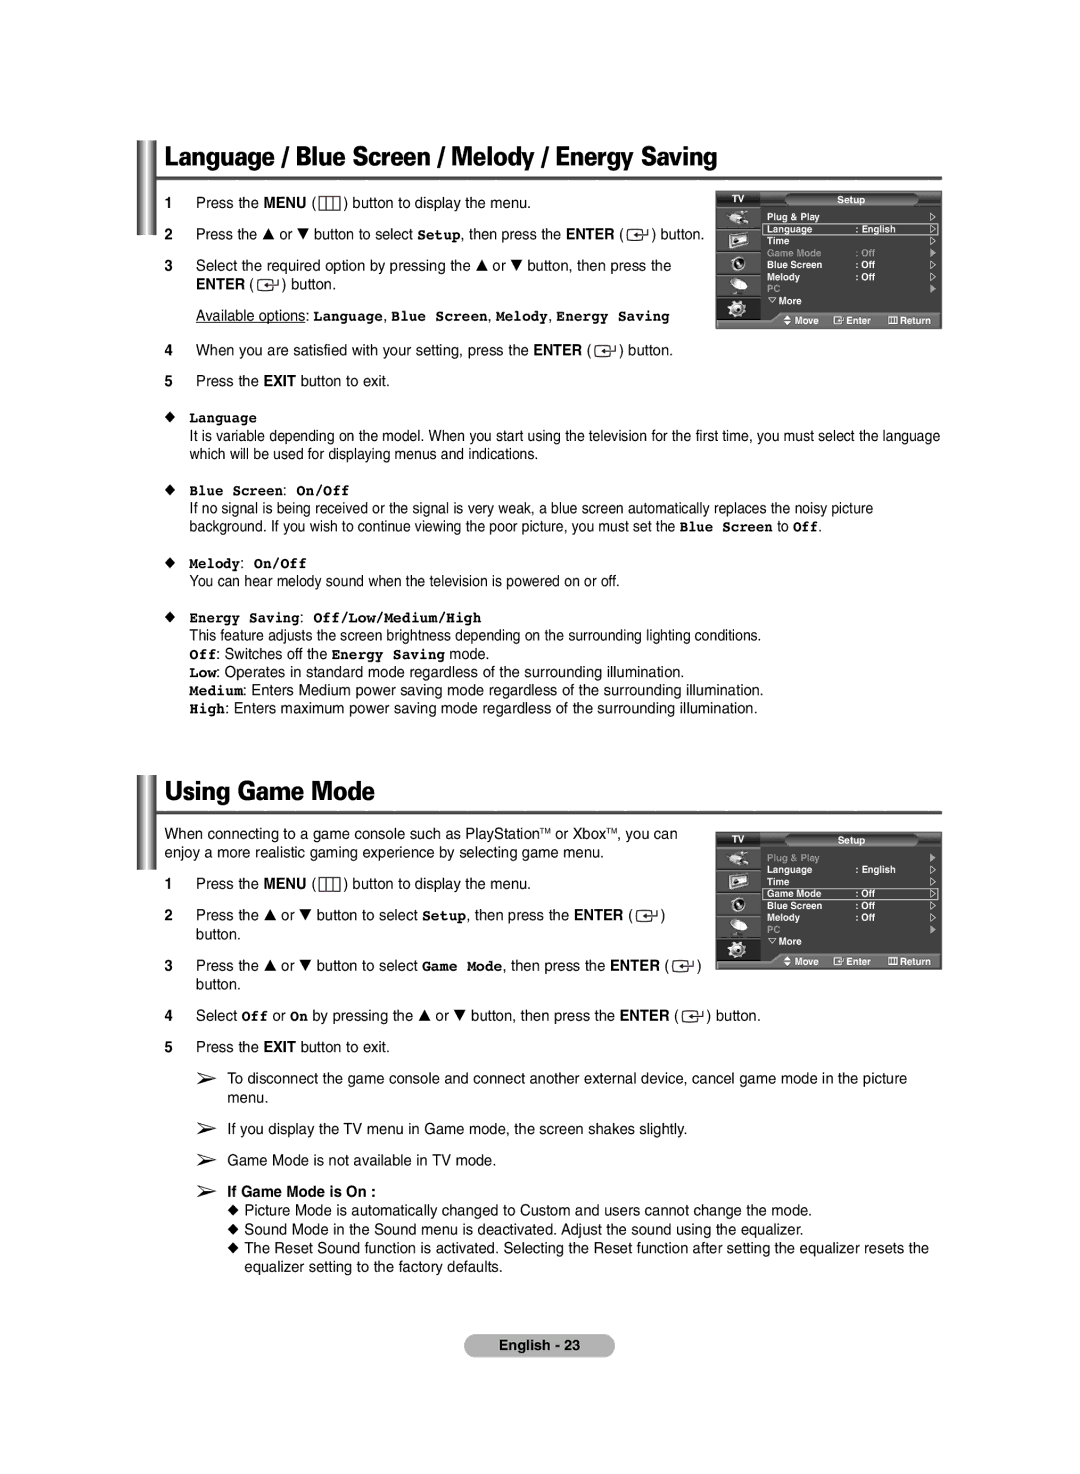 Samsung BN68-00990V-03 manual Language / Blue Screen / Melody / Energy Saving, Using Game Mode 